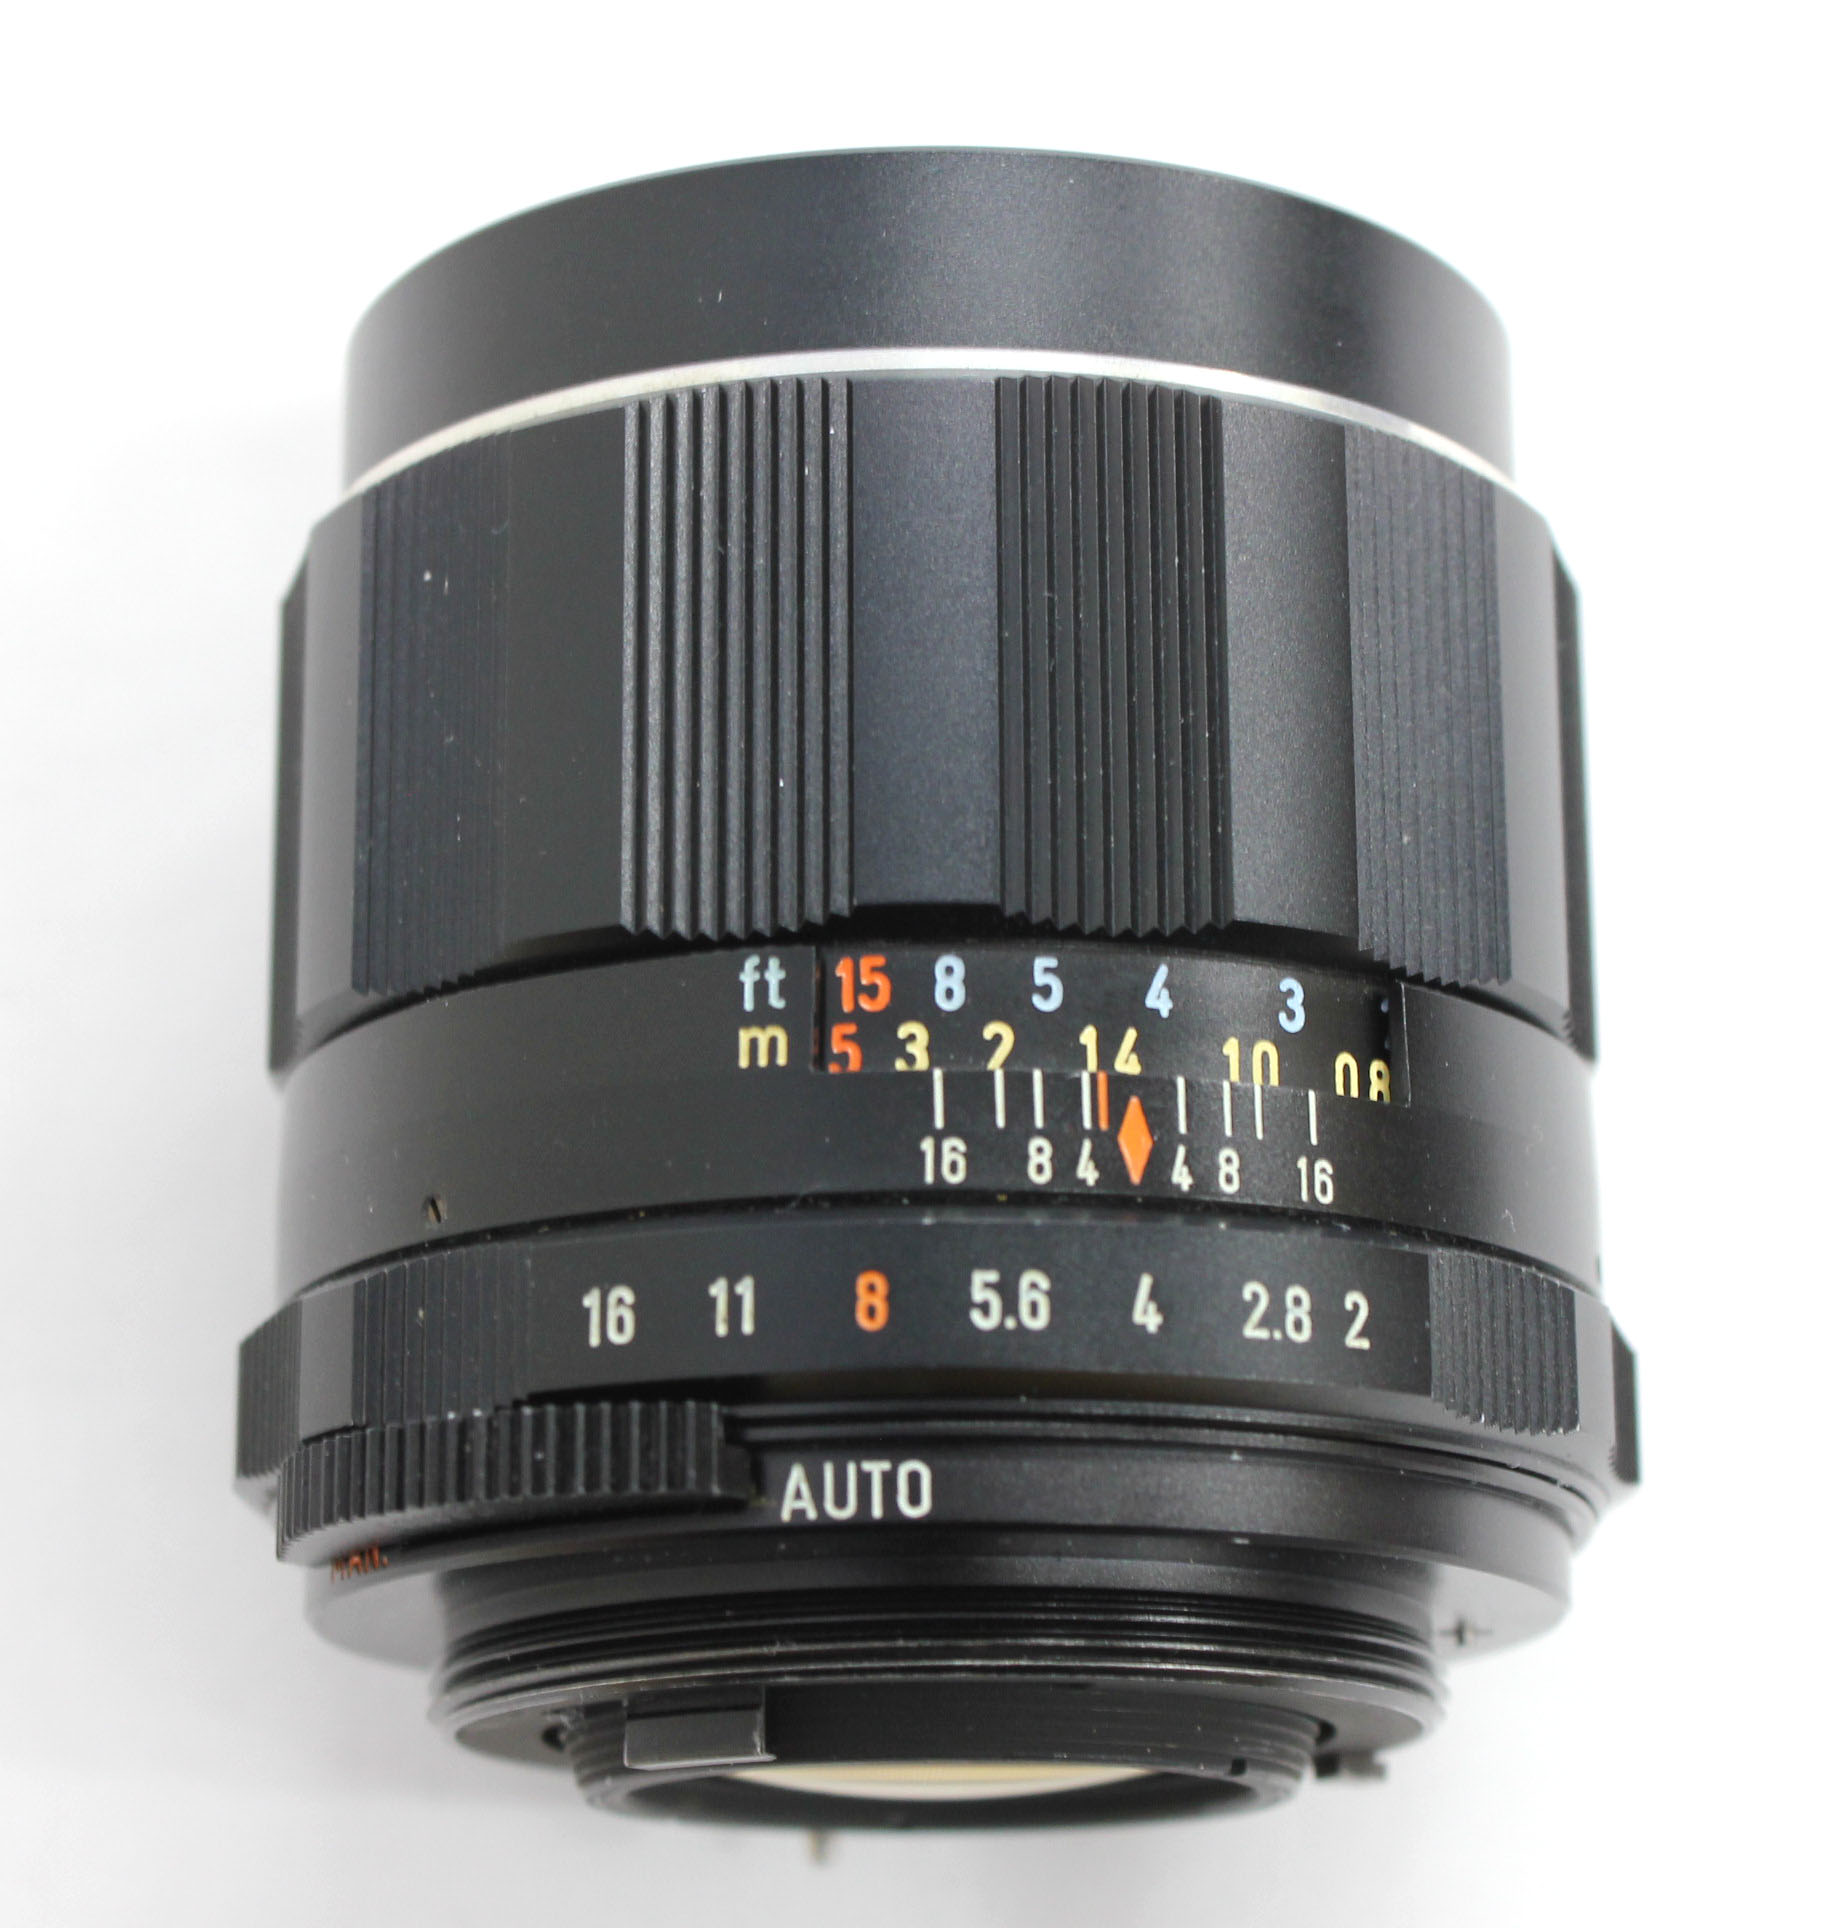  Pentax Super Multi Coated SMC Takumar 35mm F/2 M42 Wide Angle MF Lens from Japan Photo 3